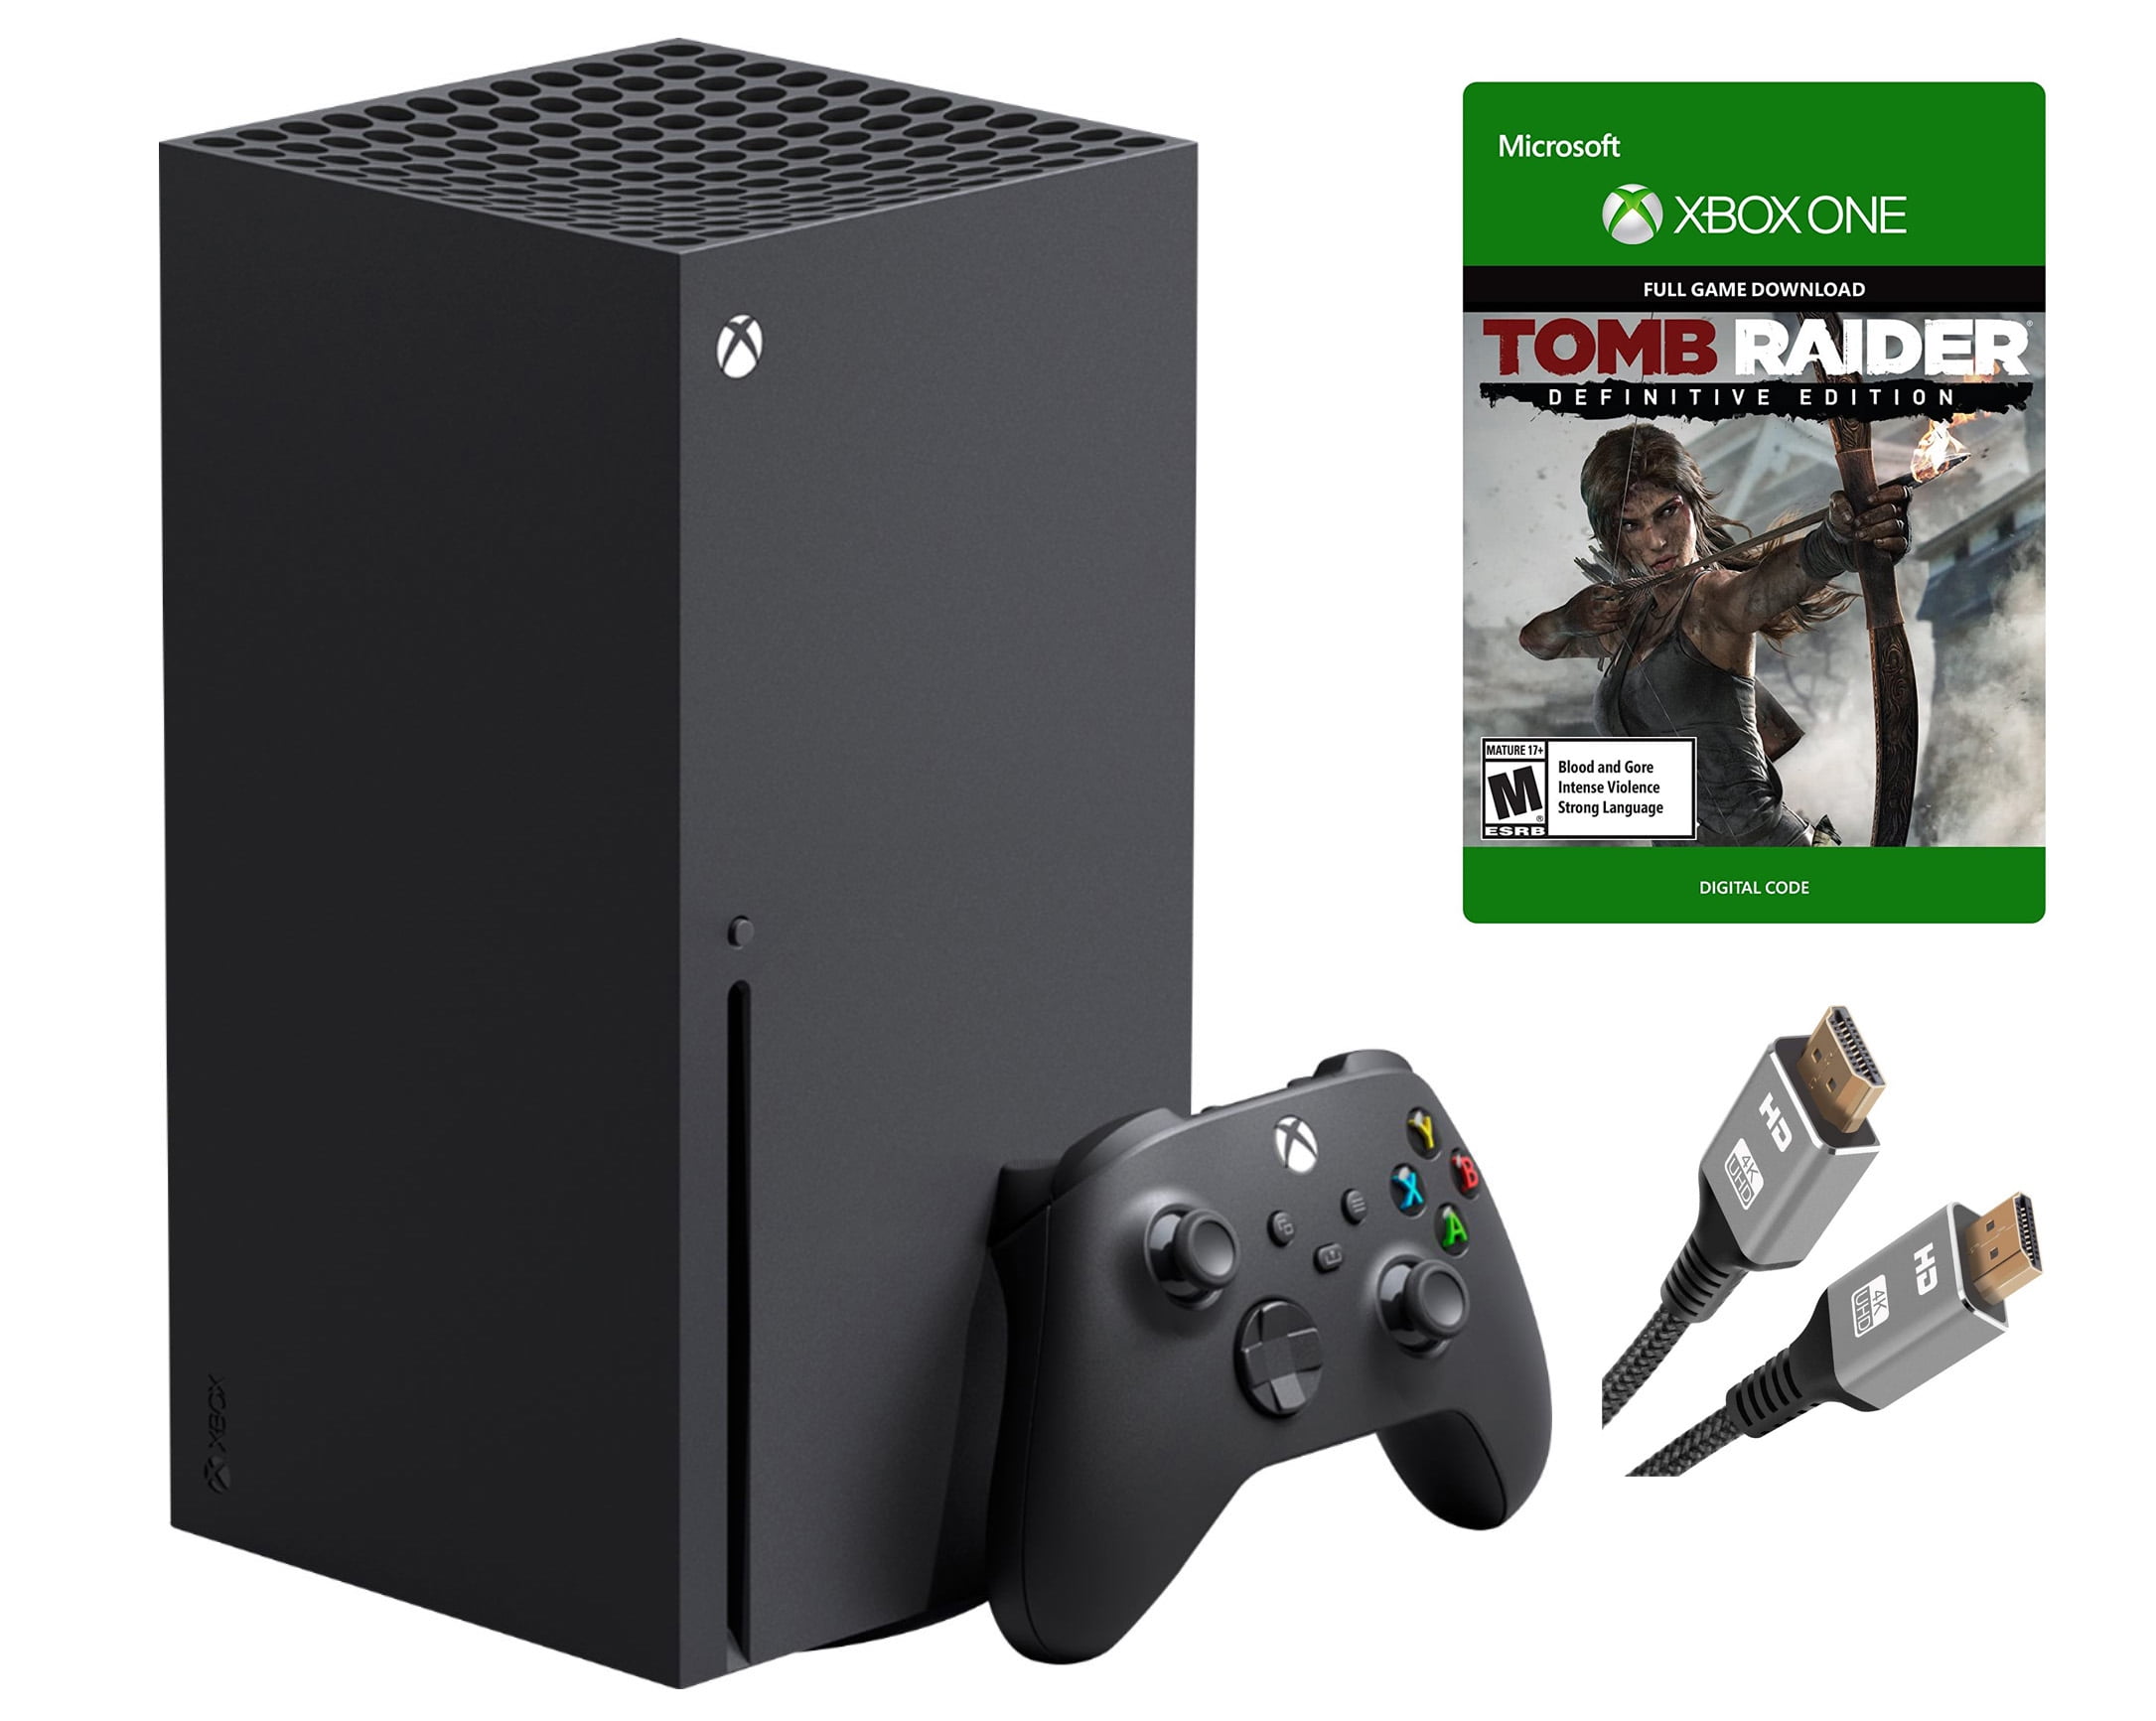 FIFA 23 ULTIMATE EDITION Xbox Series X/S e Xbox One Descarga